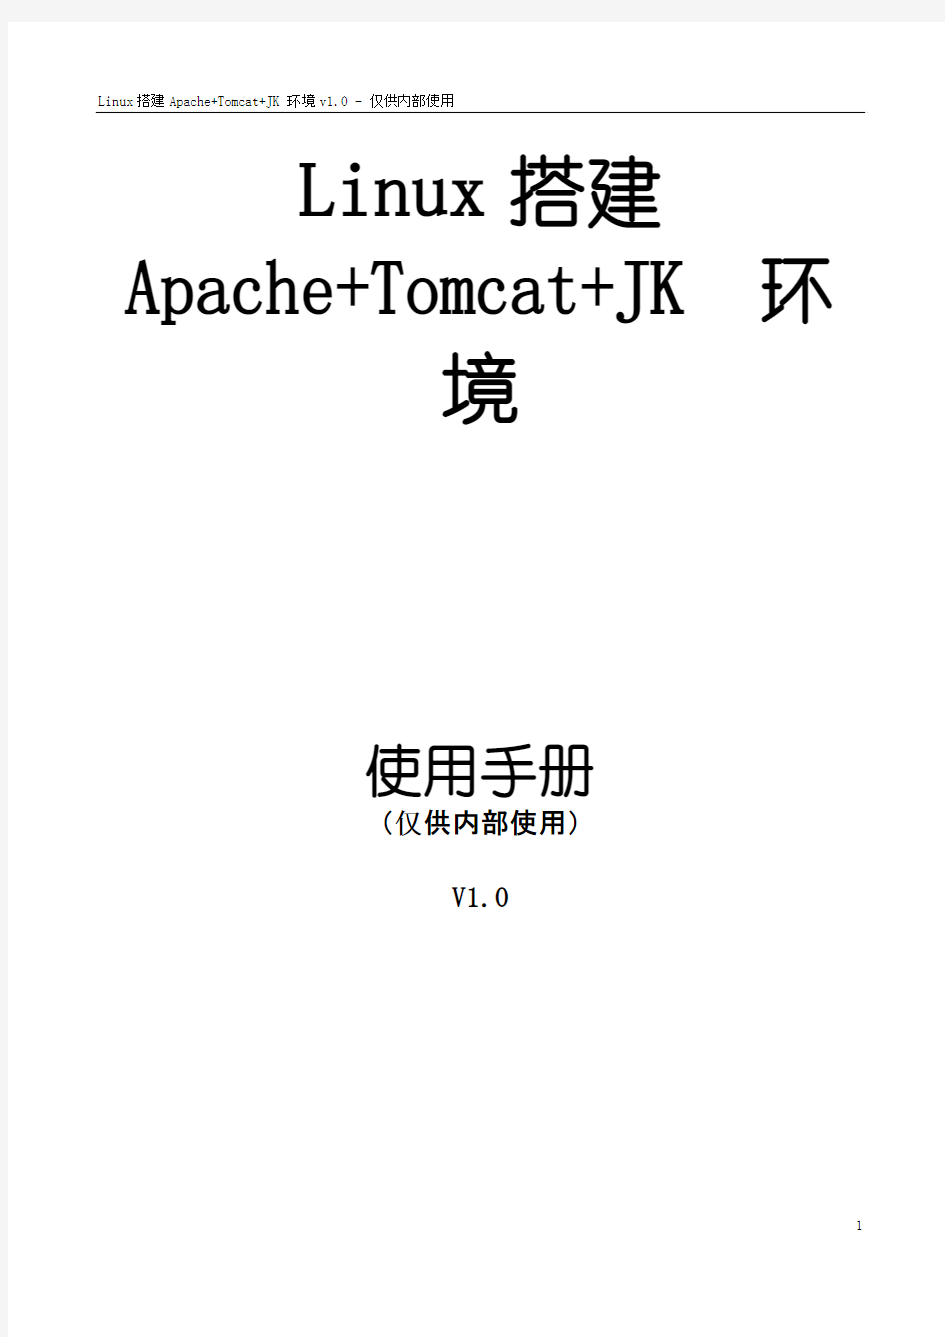 Apache+Tomcat+JK配置详解